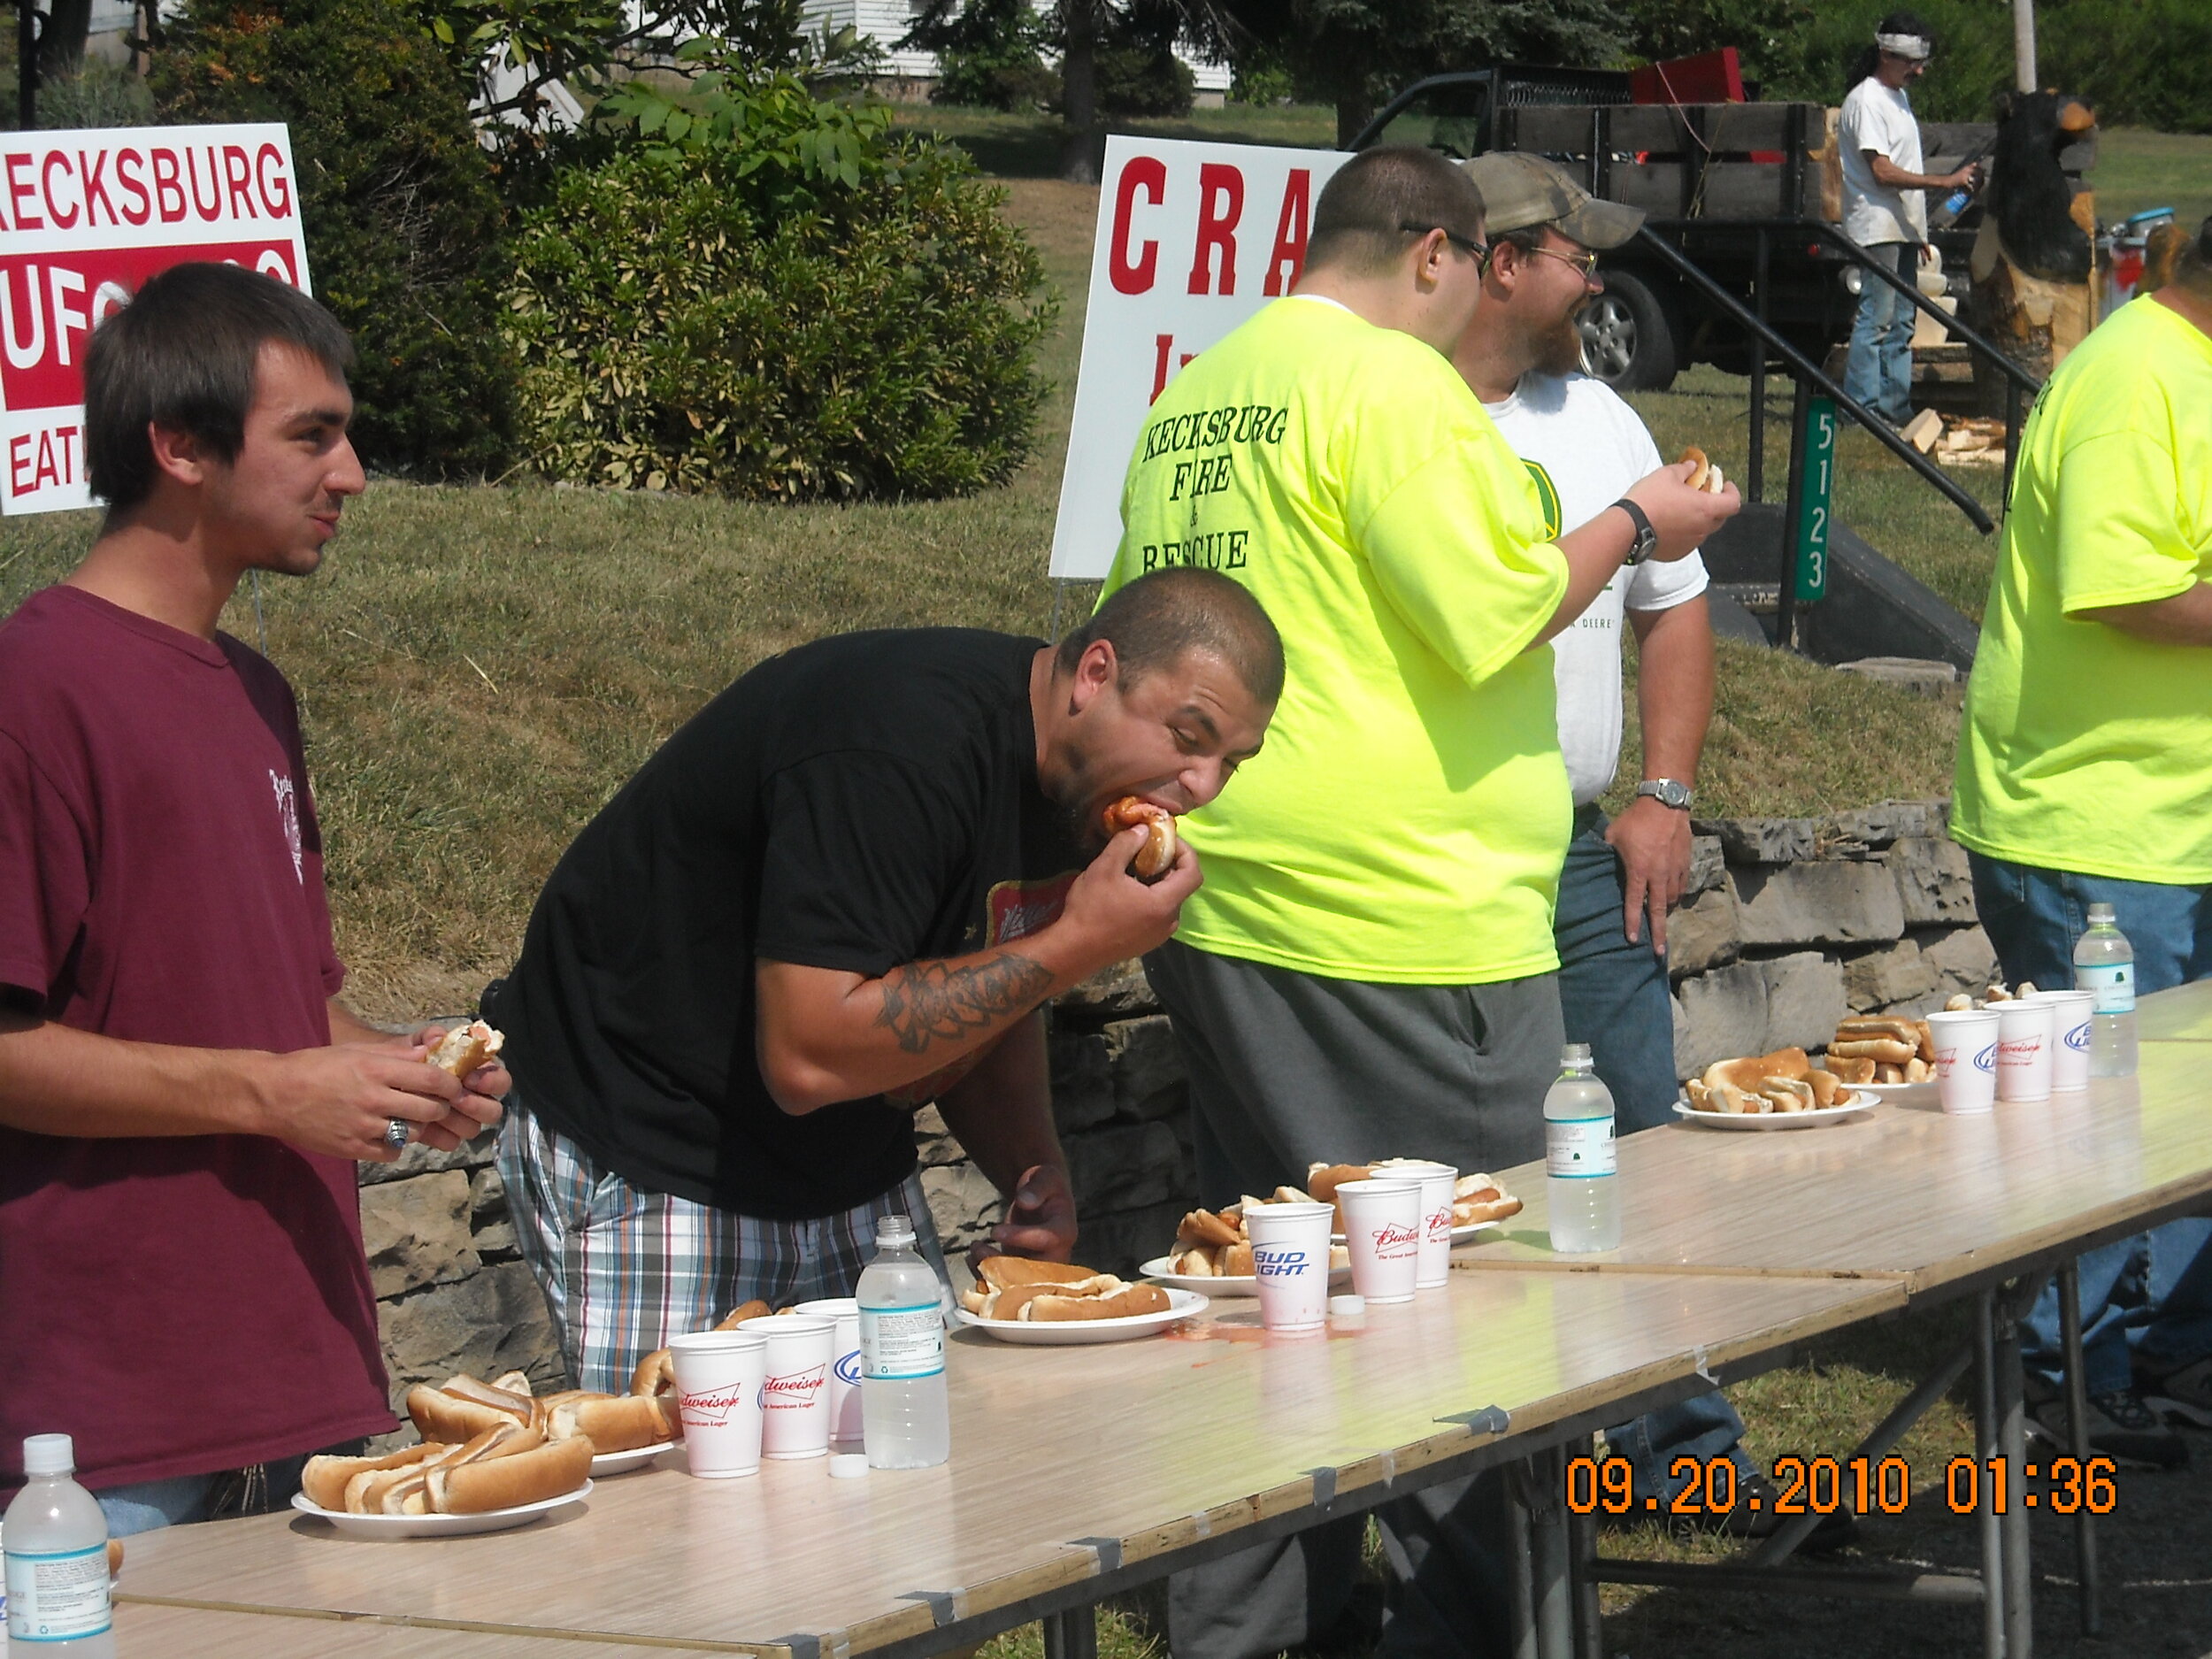  Hot Dog eating contest at the Kecksburg UFO Festival.  Photo ©Ron Struble 